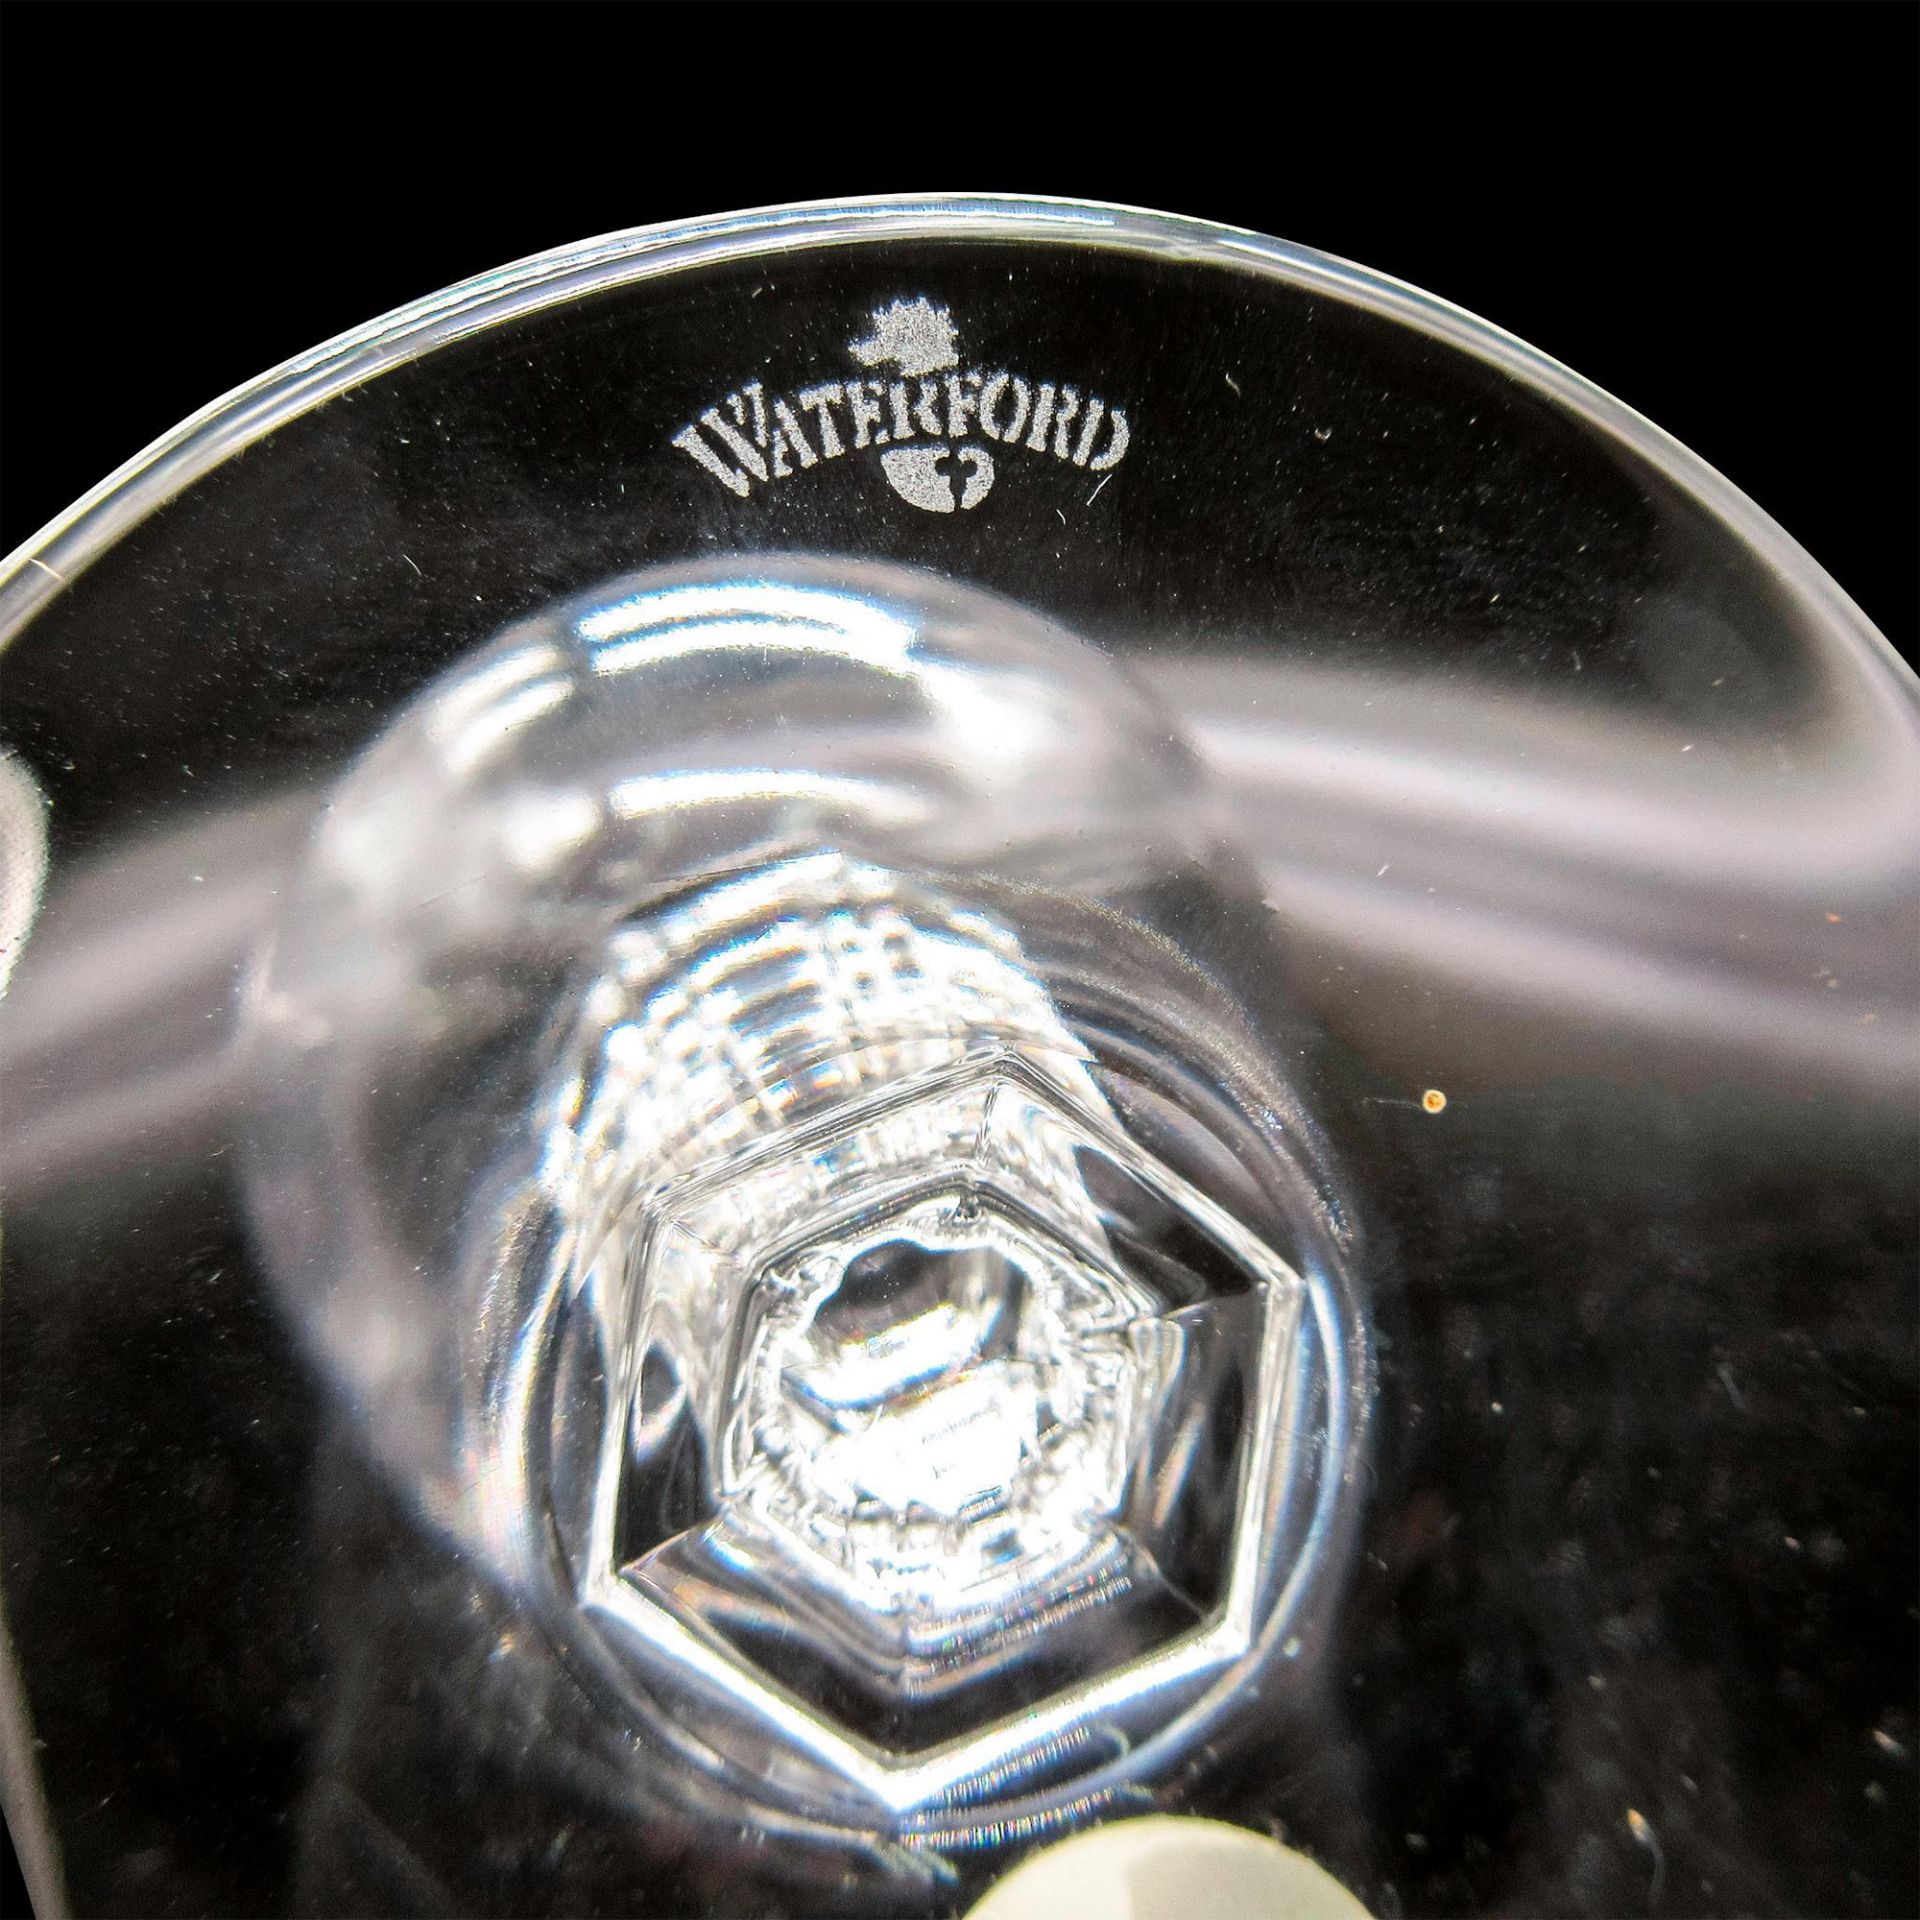 4pc Waterford Crystal Iced Tea Glasses, Metropolitan - Image 3 of 6